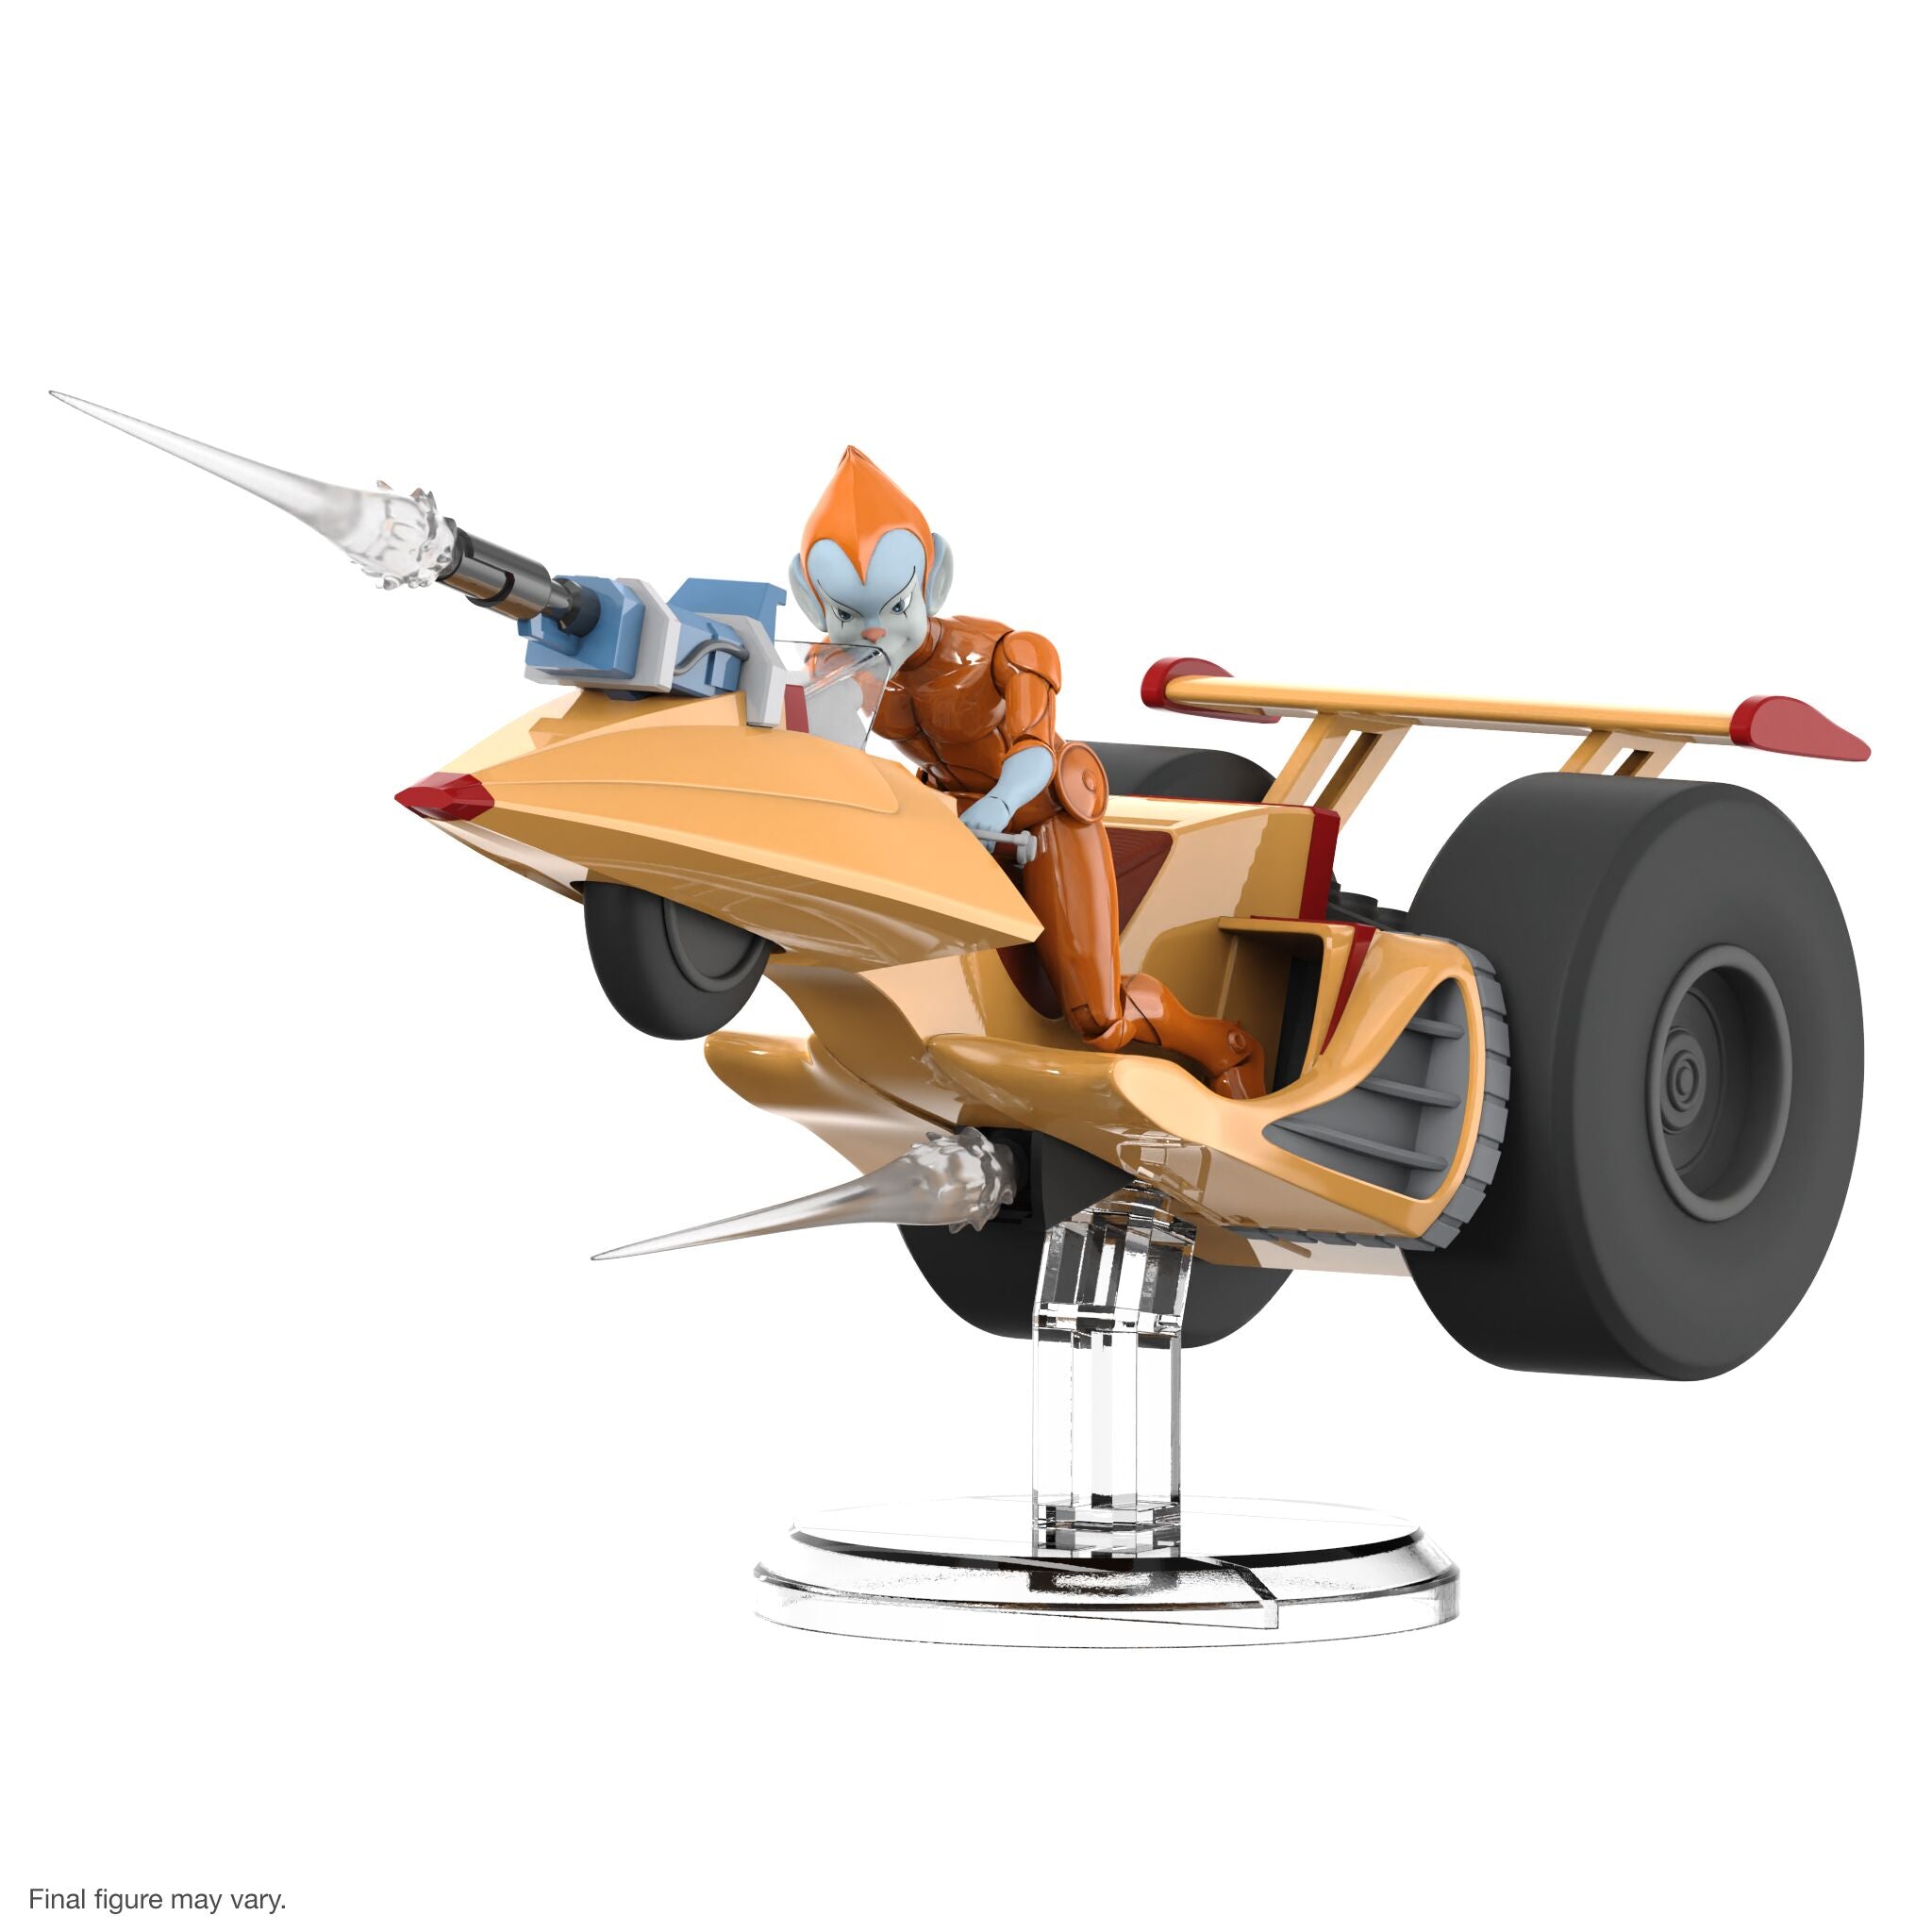 SilverHawks ULTIMATES! Wave 5 - Copper Kidd & Space Racer